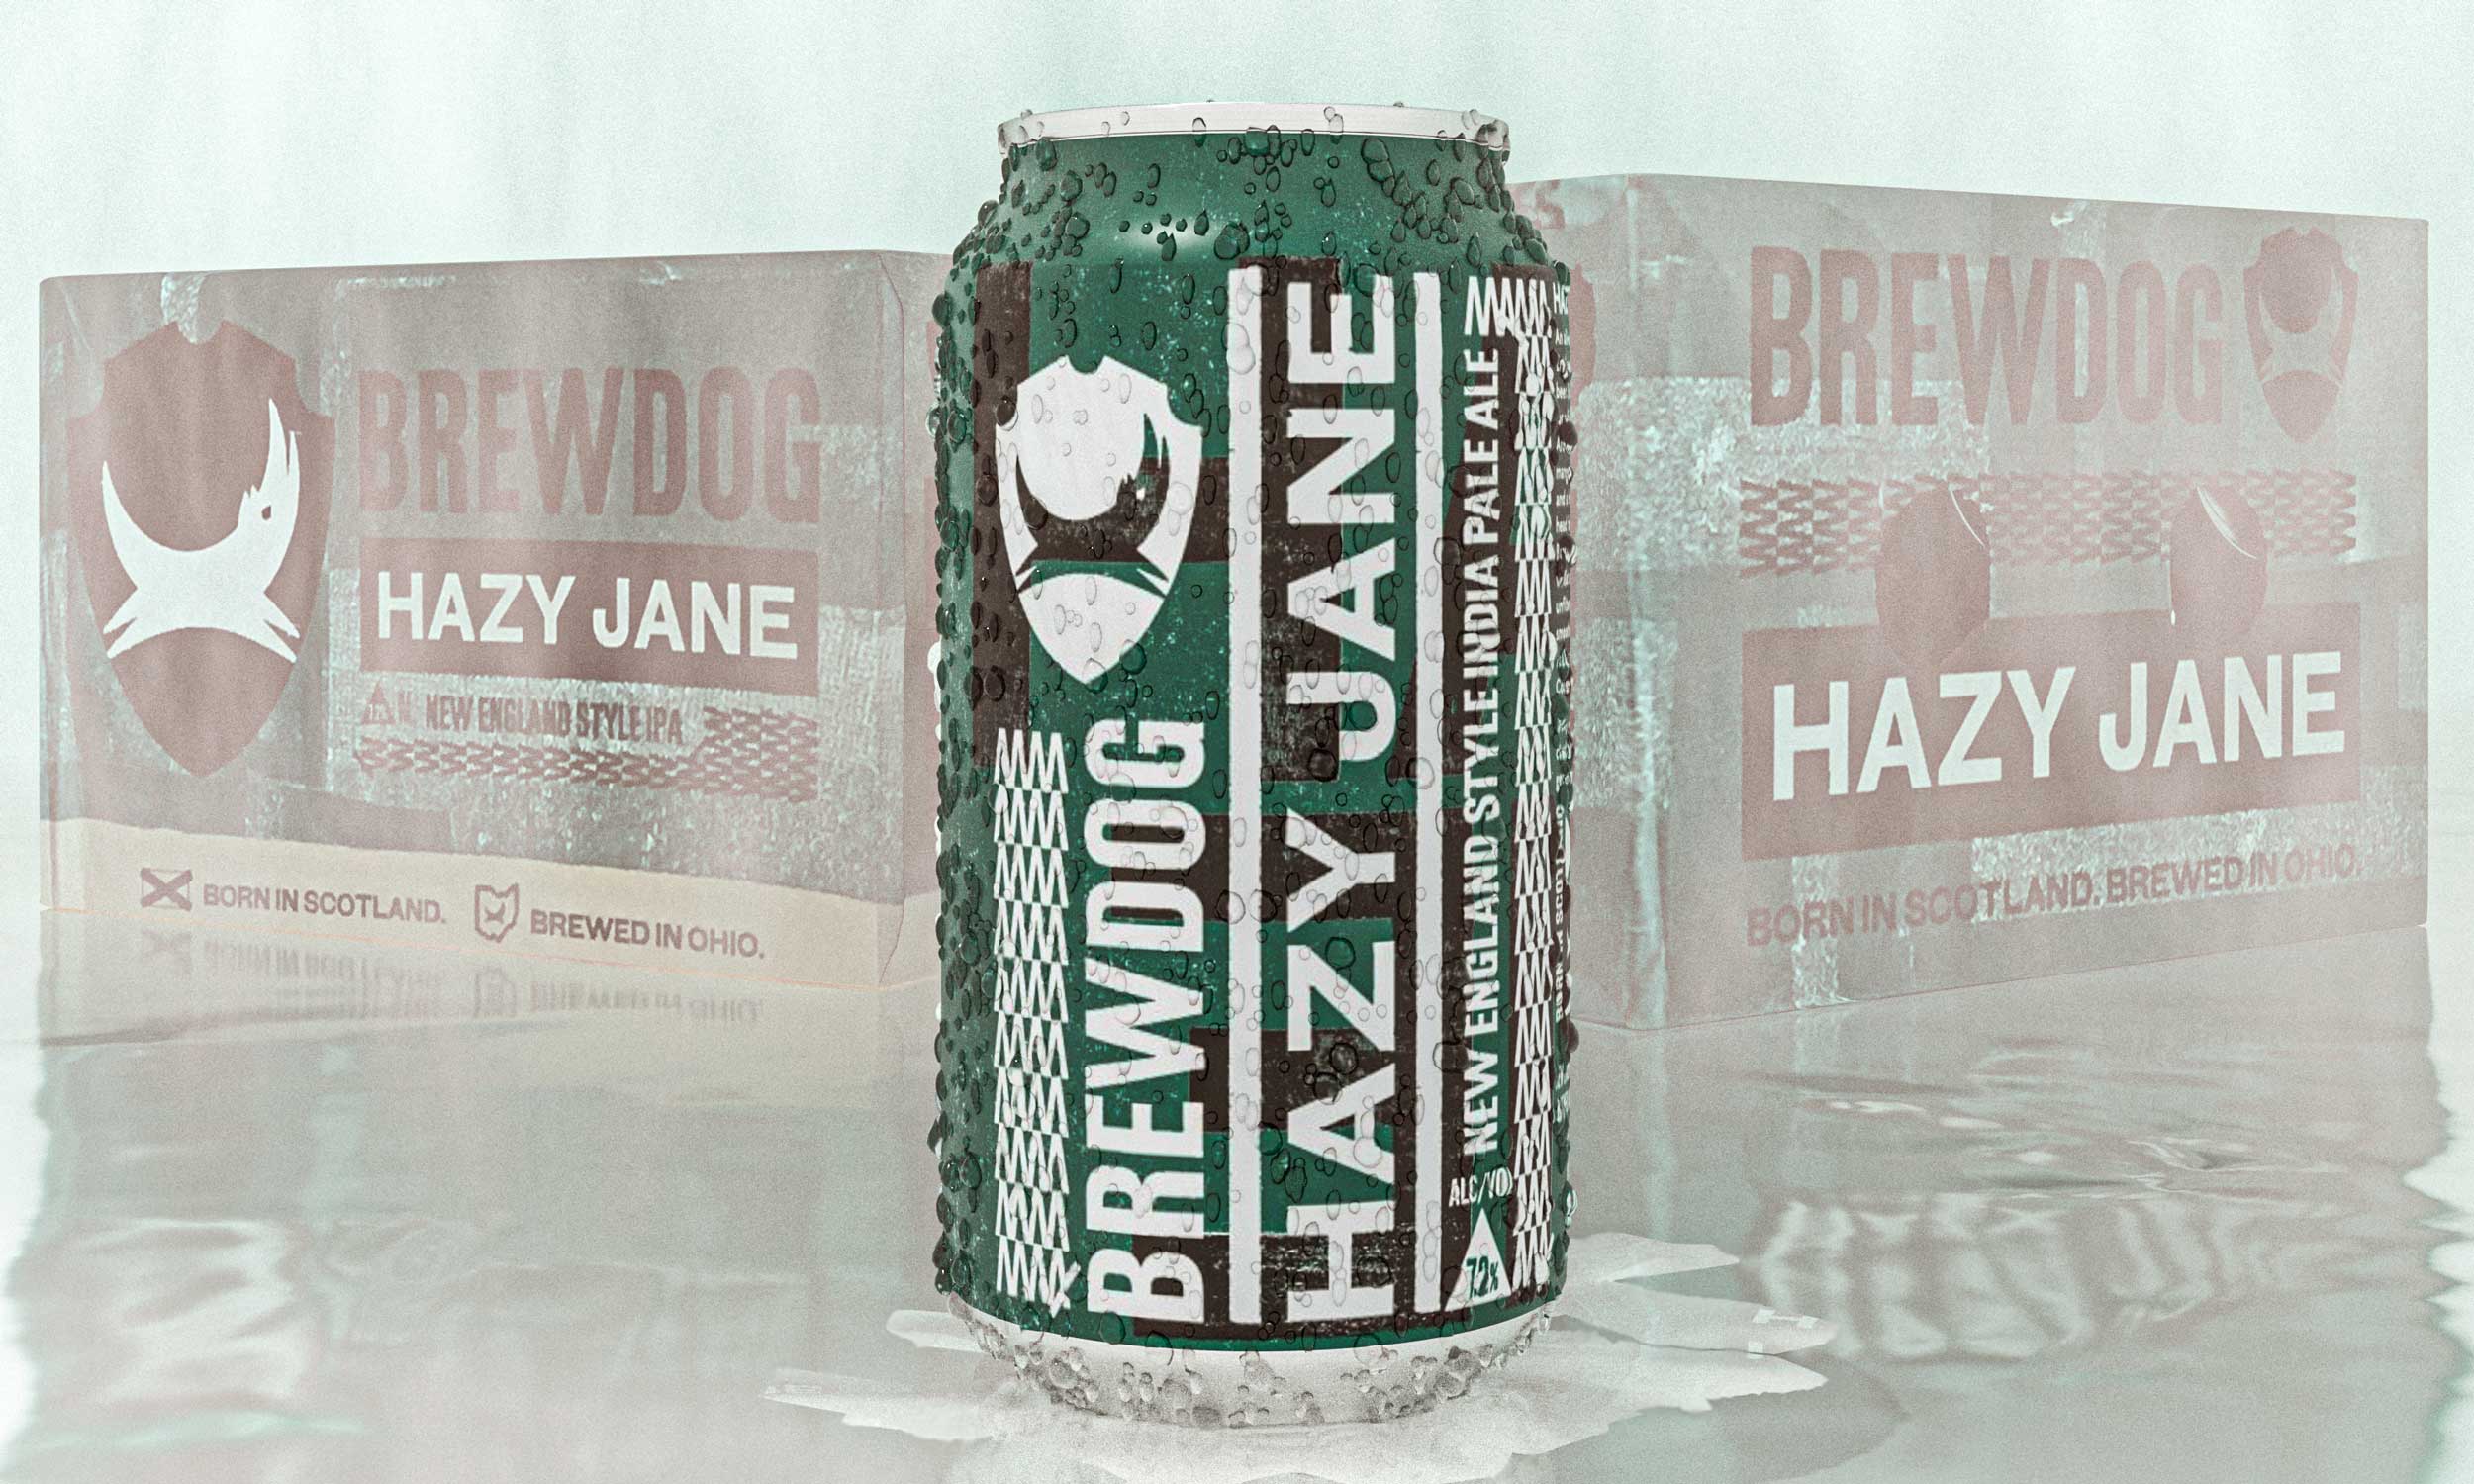 Hazy-Jane Brew Dogs IPA Beer